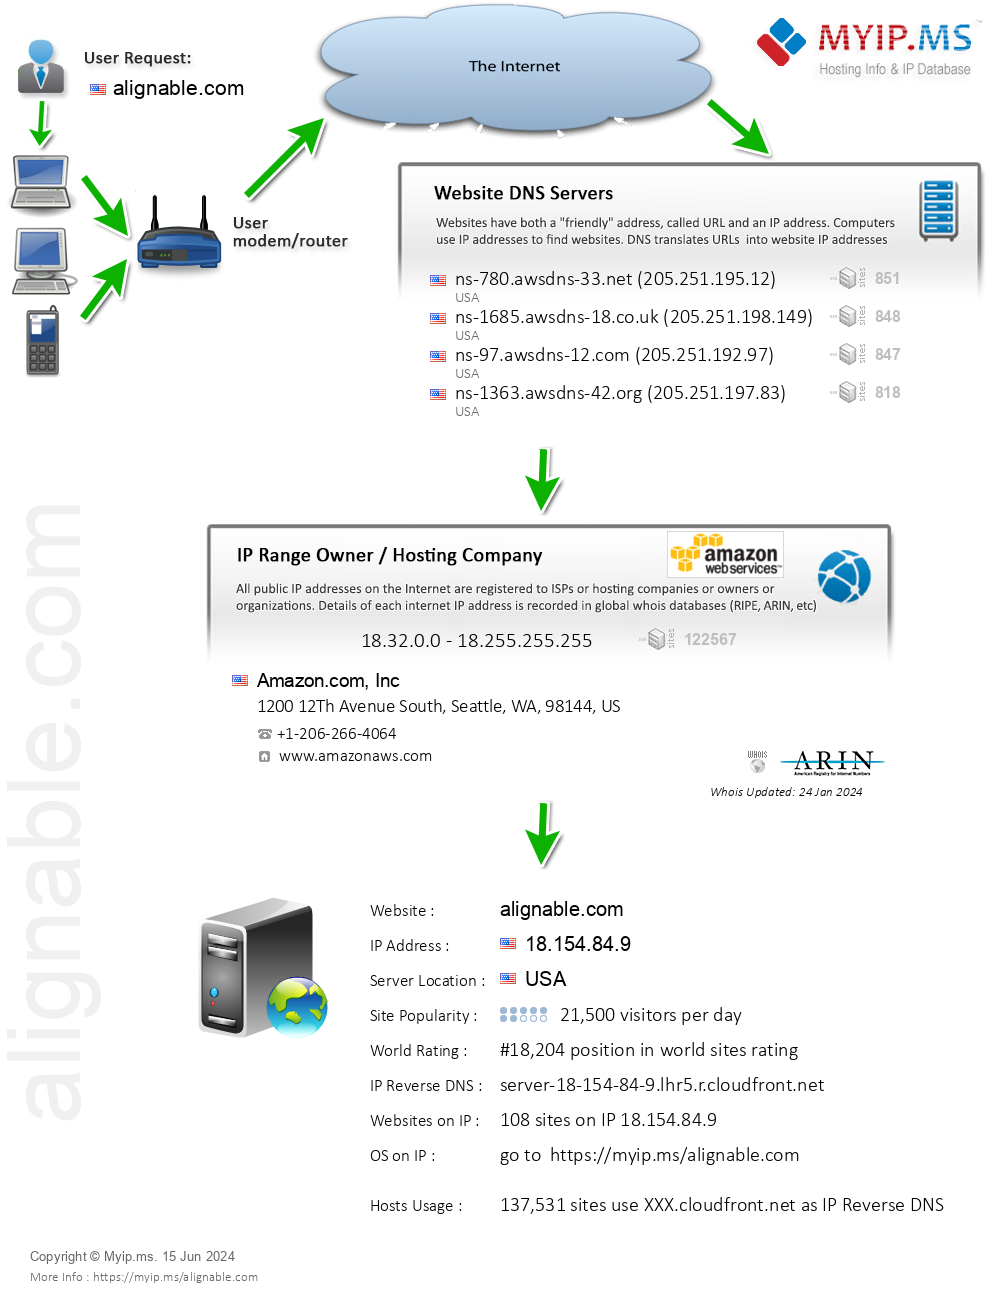 Alignable.com - Website Hosting Visual IP Diagram